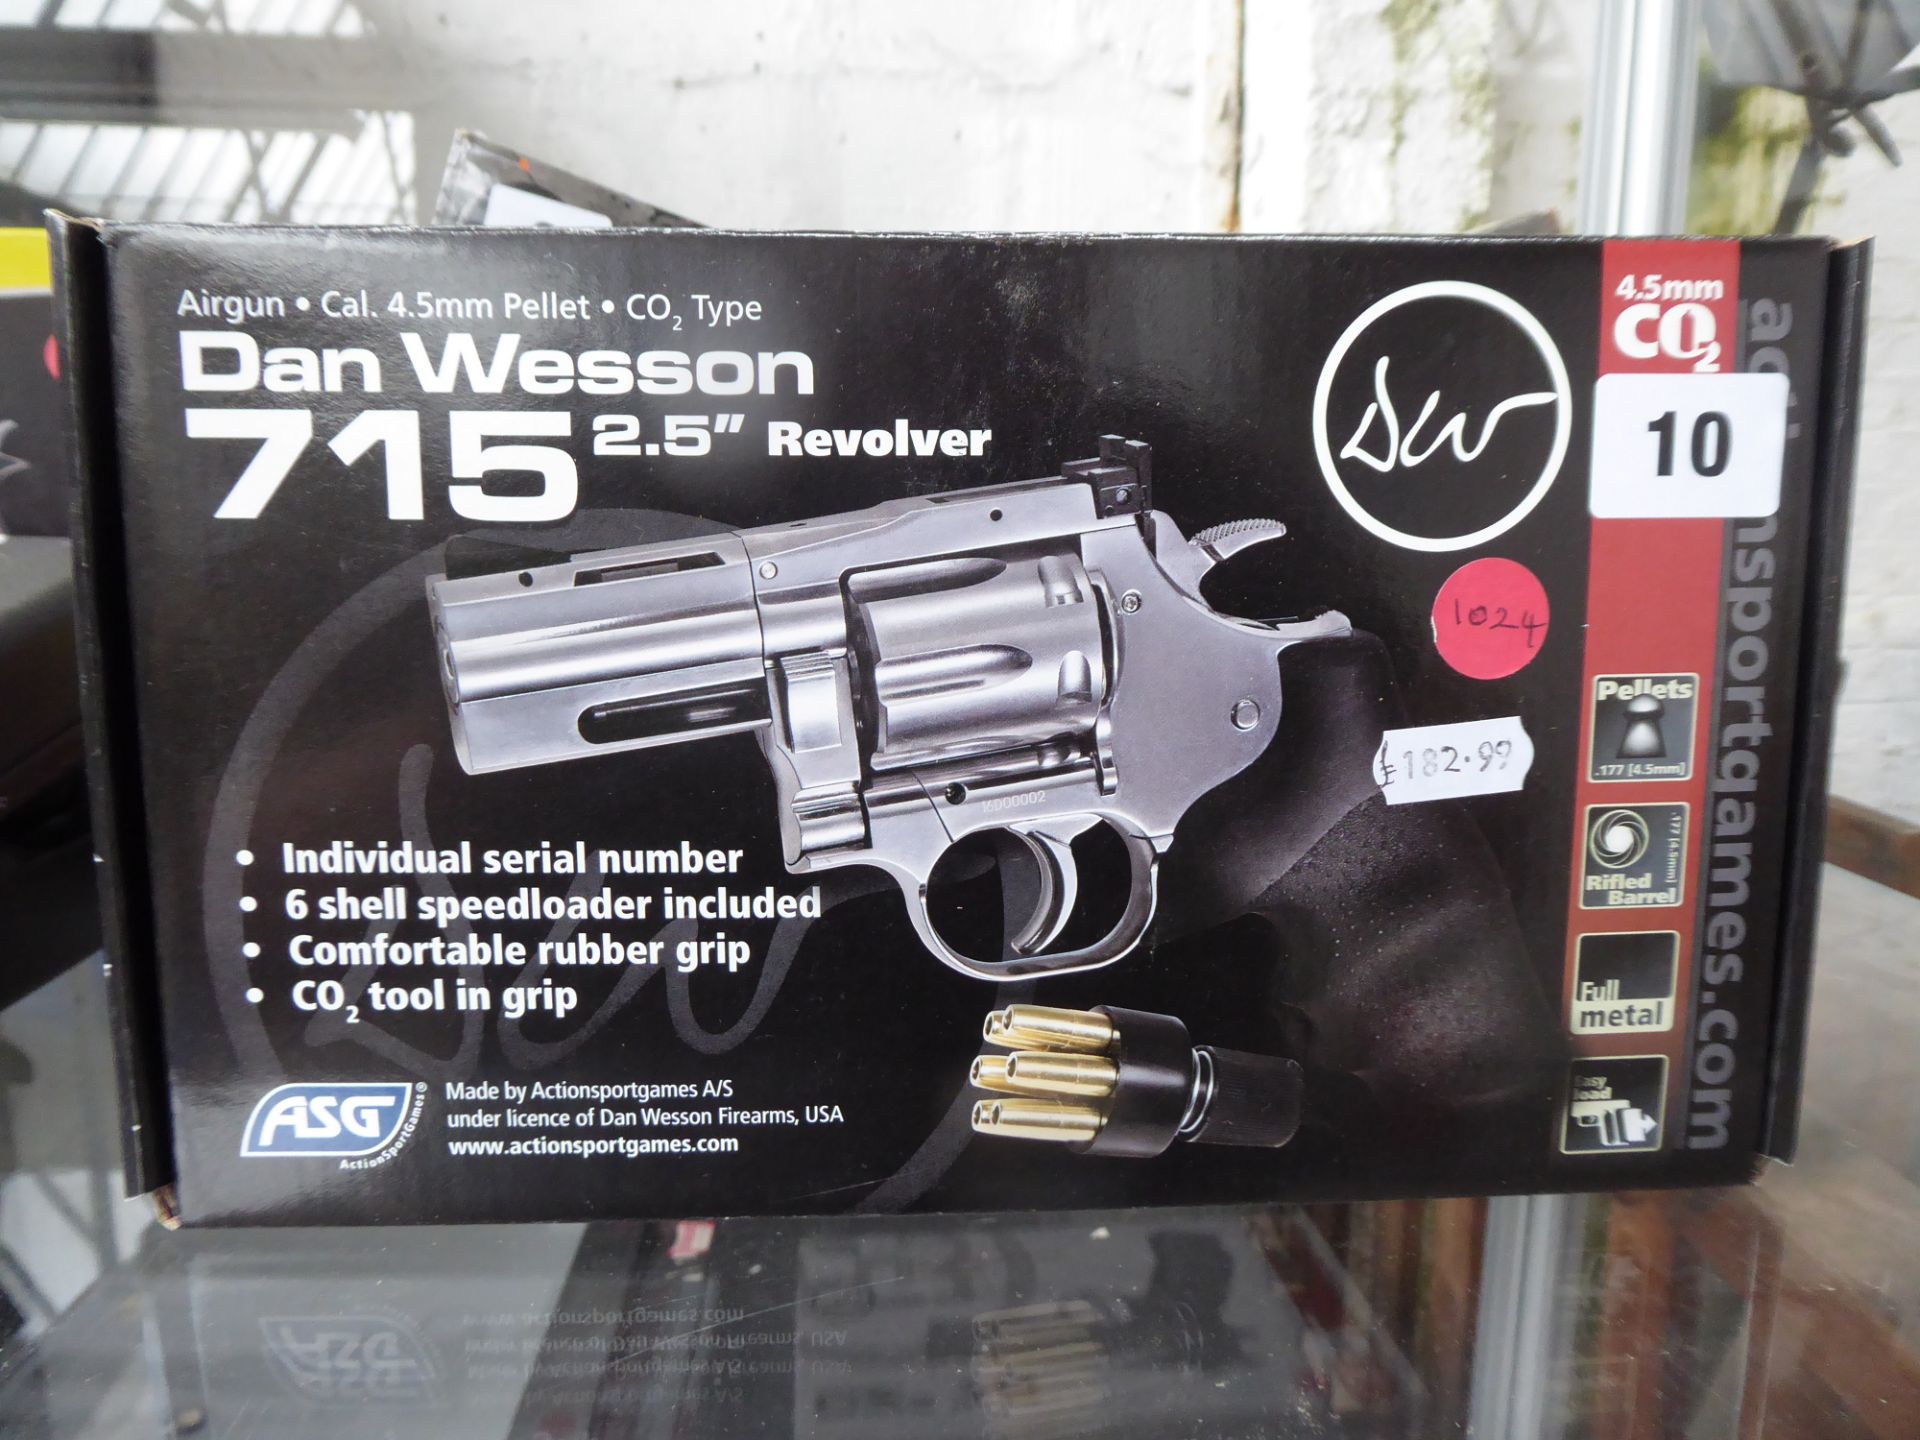 Boxed Dan Wesson revolver C02 .177 pellet air pistol